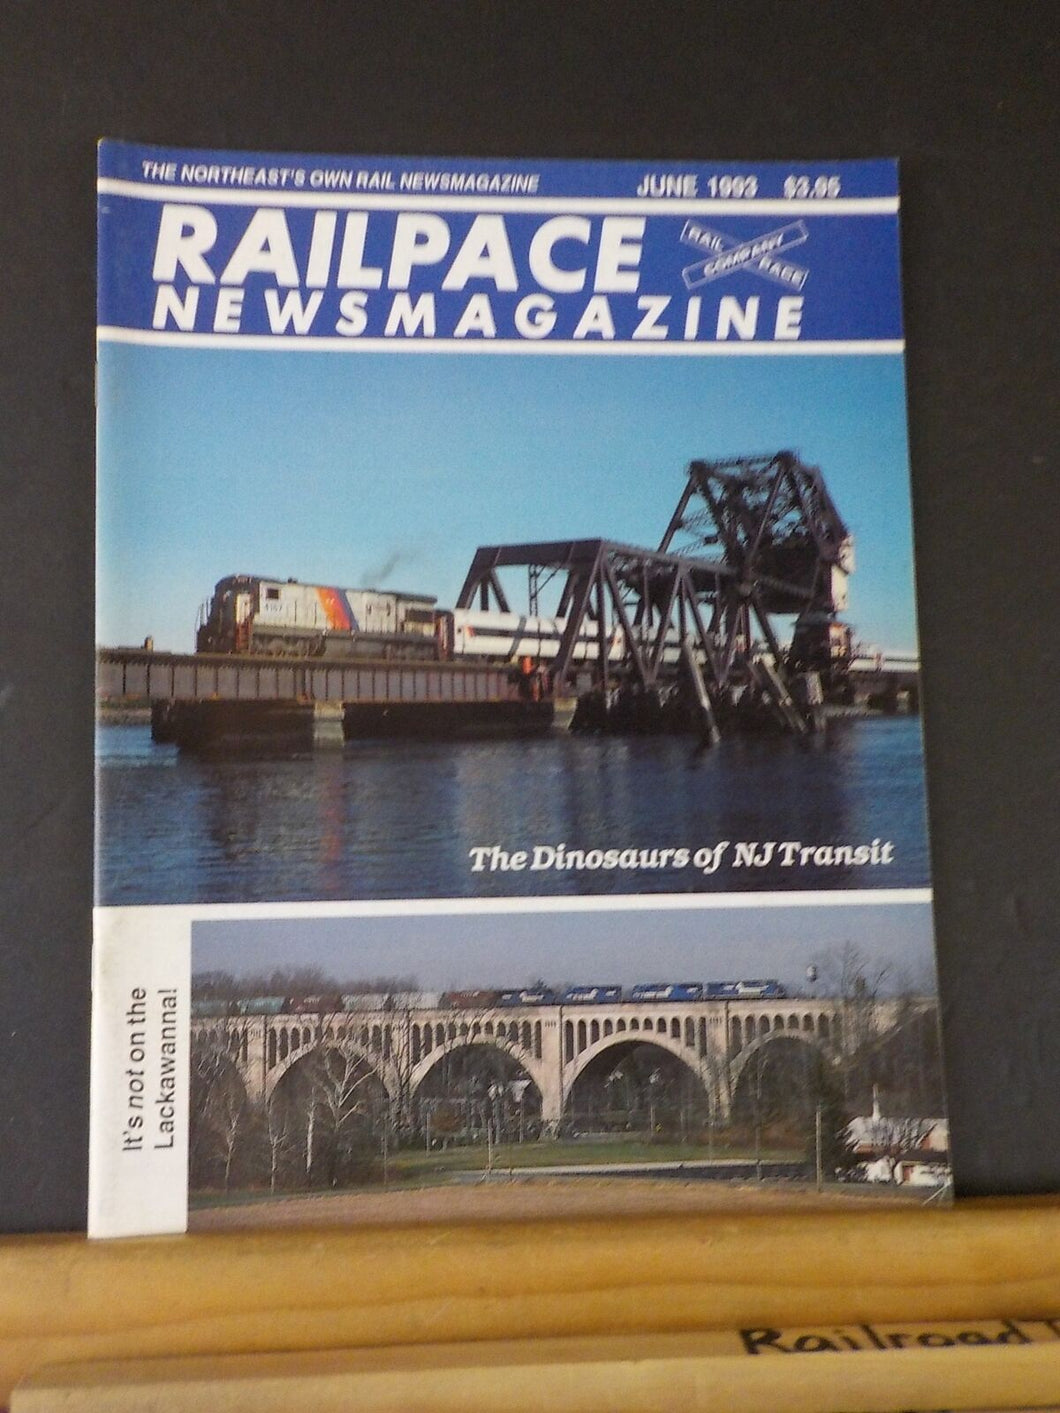 Rail Pace News Magazine 1993 June Railpace NJ Transit dinosaurs